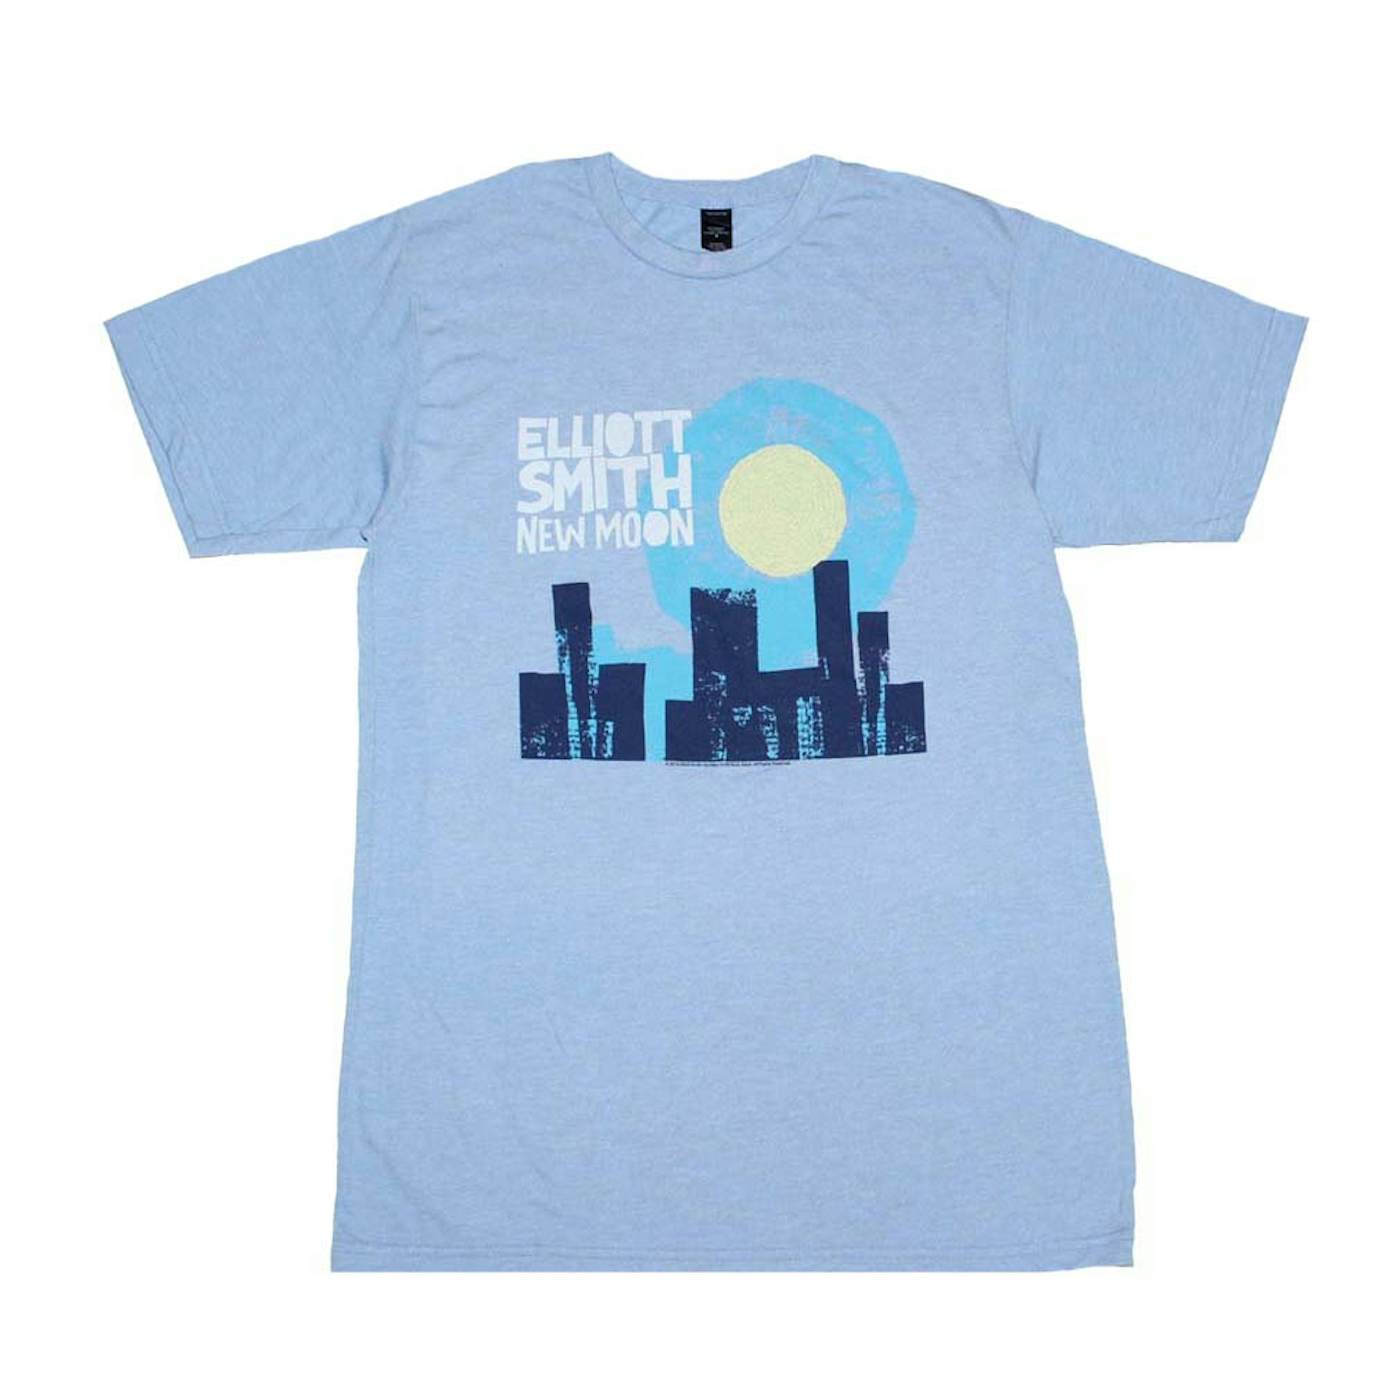 Elliott Smith T Shirt | Elliott Smith New Moon T-Shirt